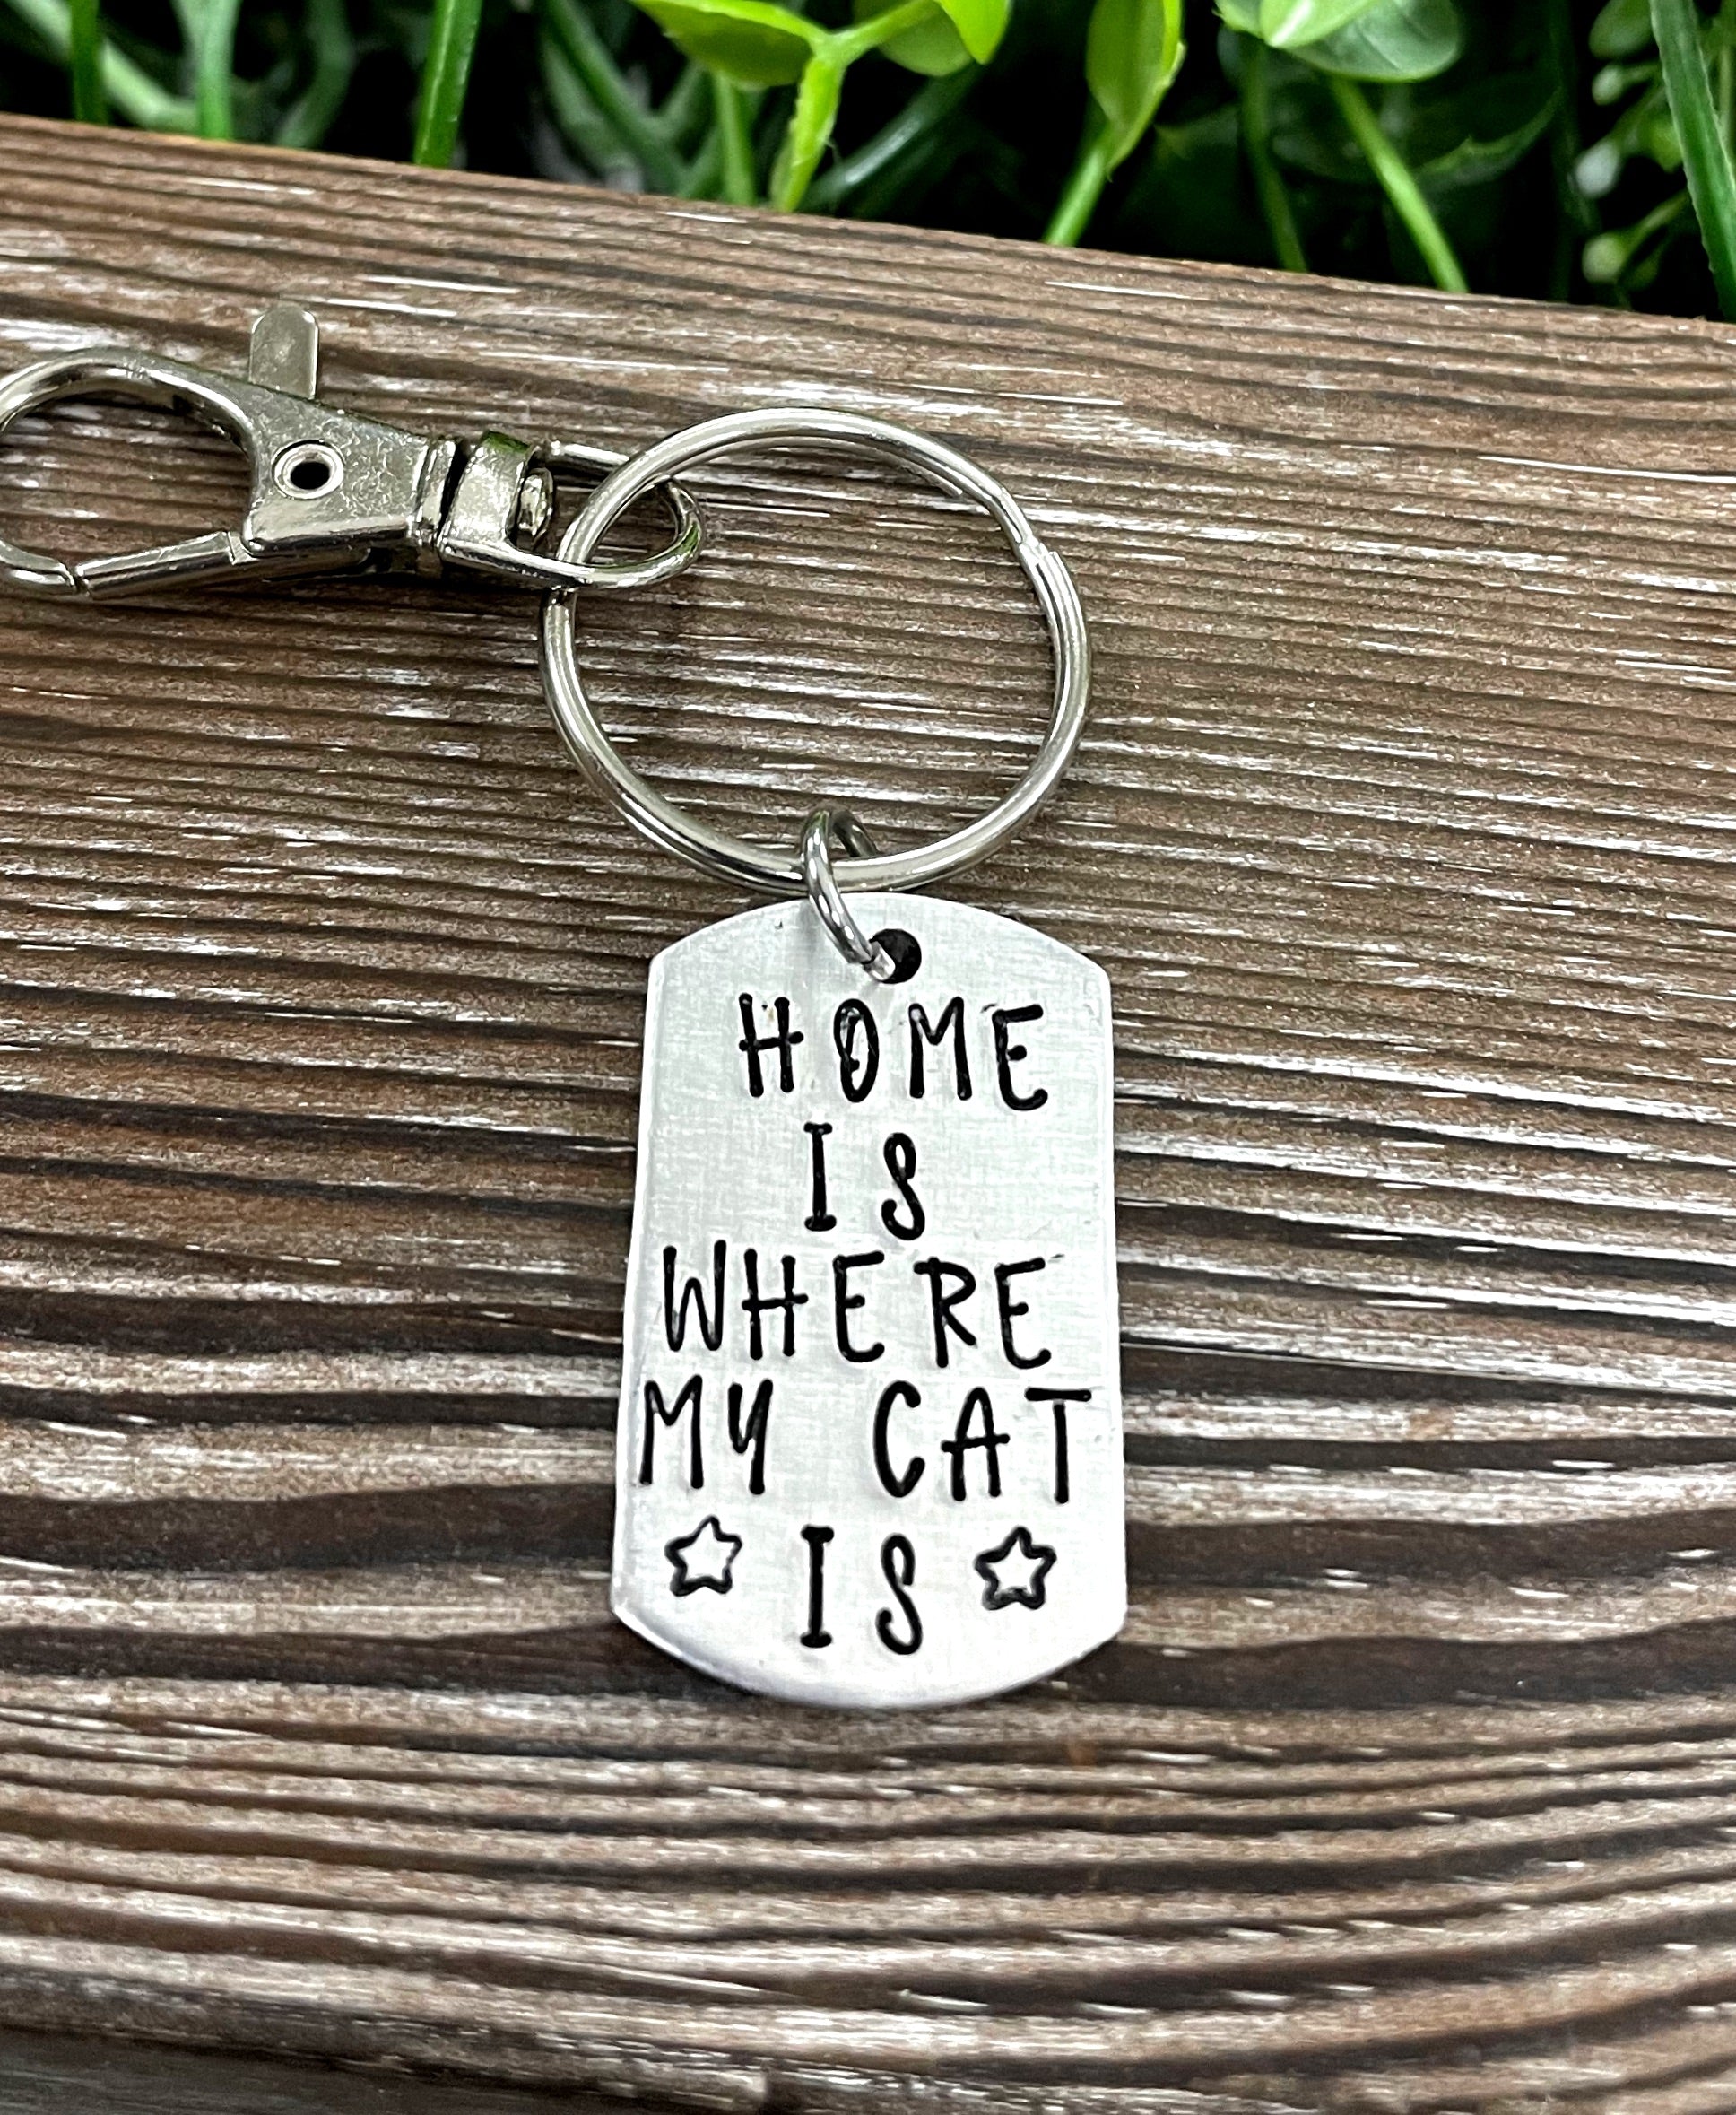 "Home is Where My Cat Is" Handmade Key Chain